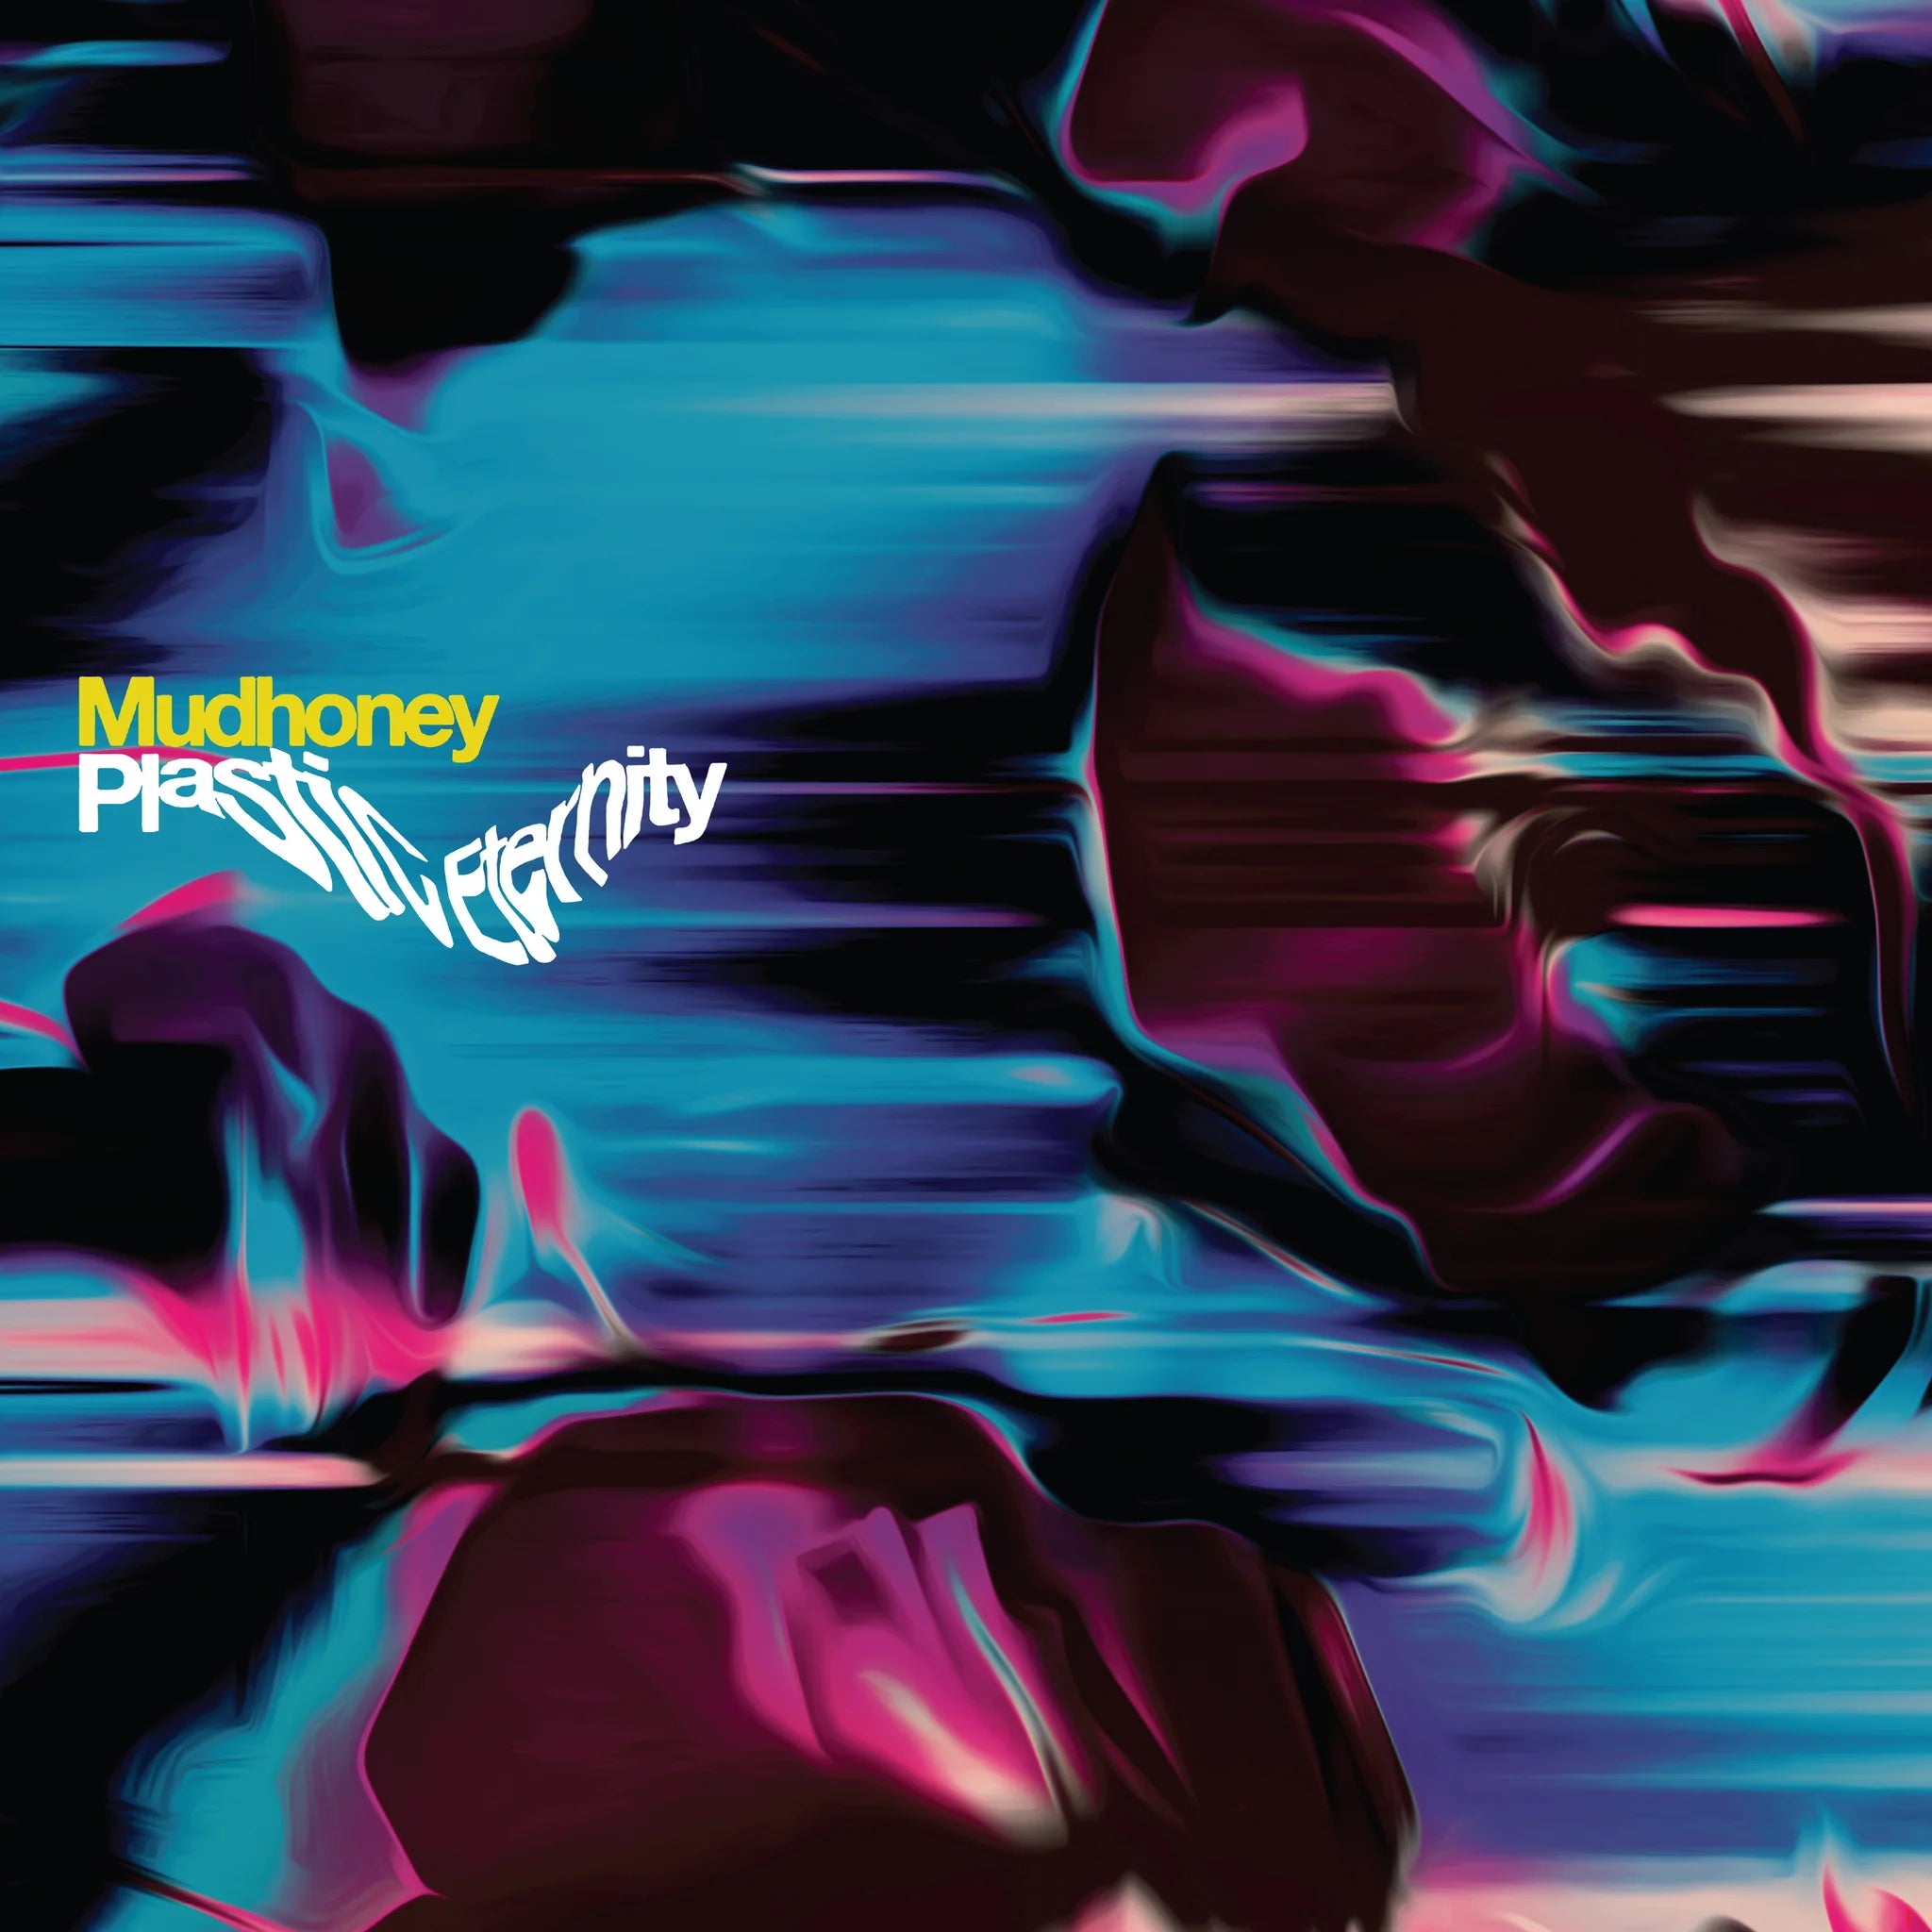 MUDHONEY - PLASTIC ETERNITY Vinyl LP